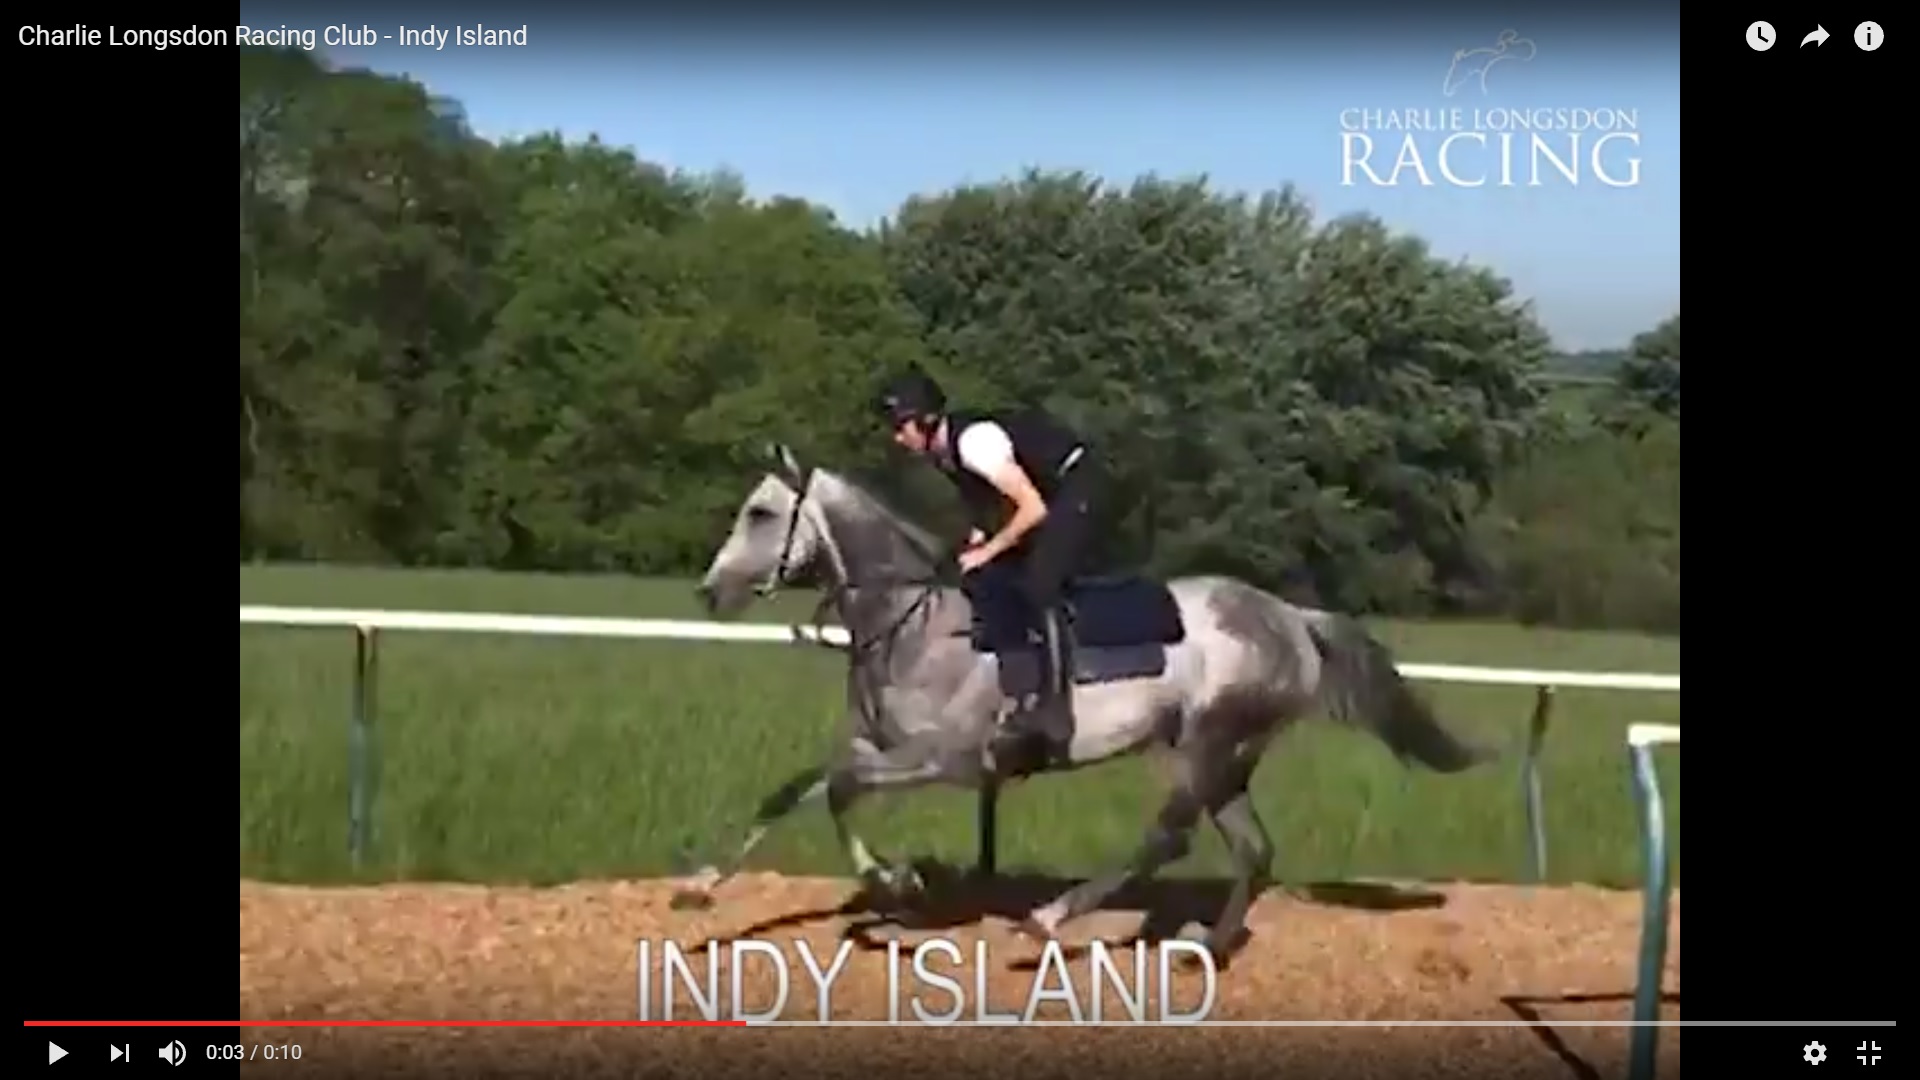 Indy Island - The Charlie Longsdon Racing Club